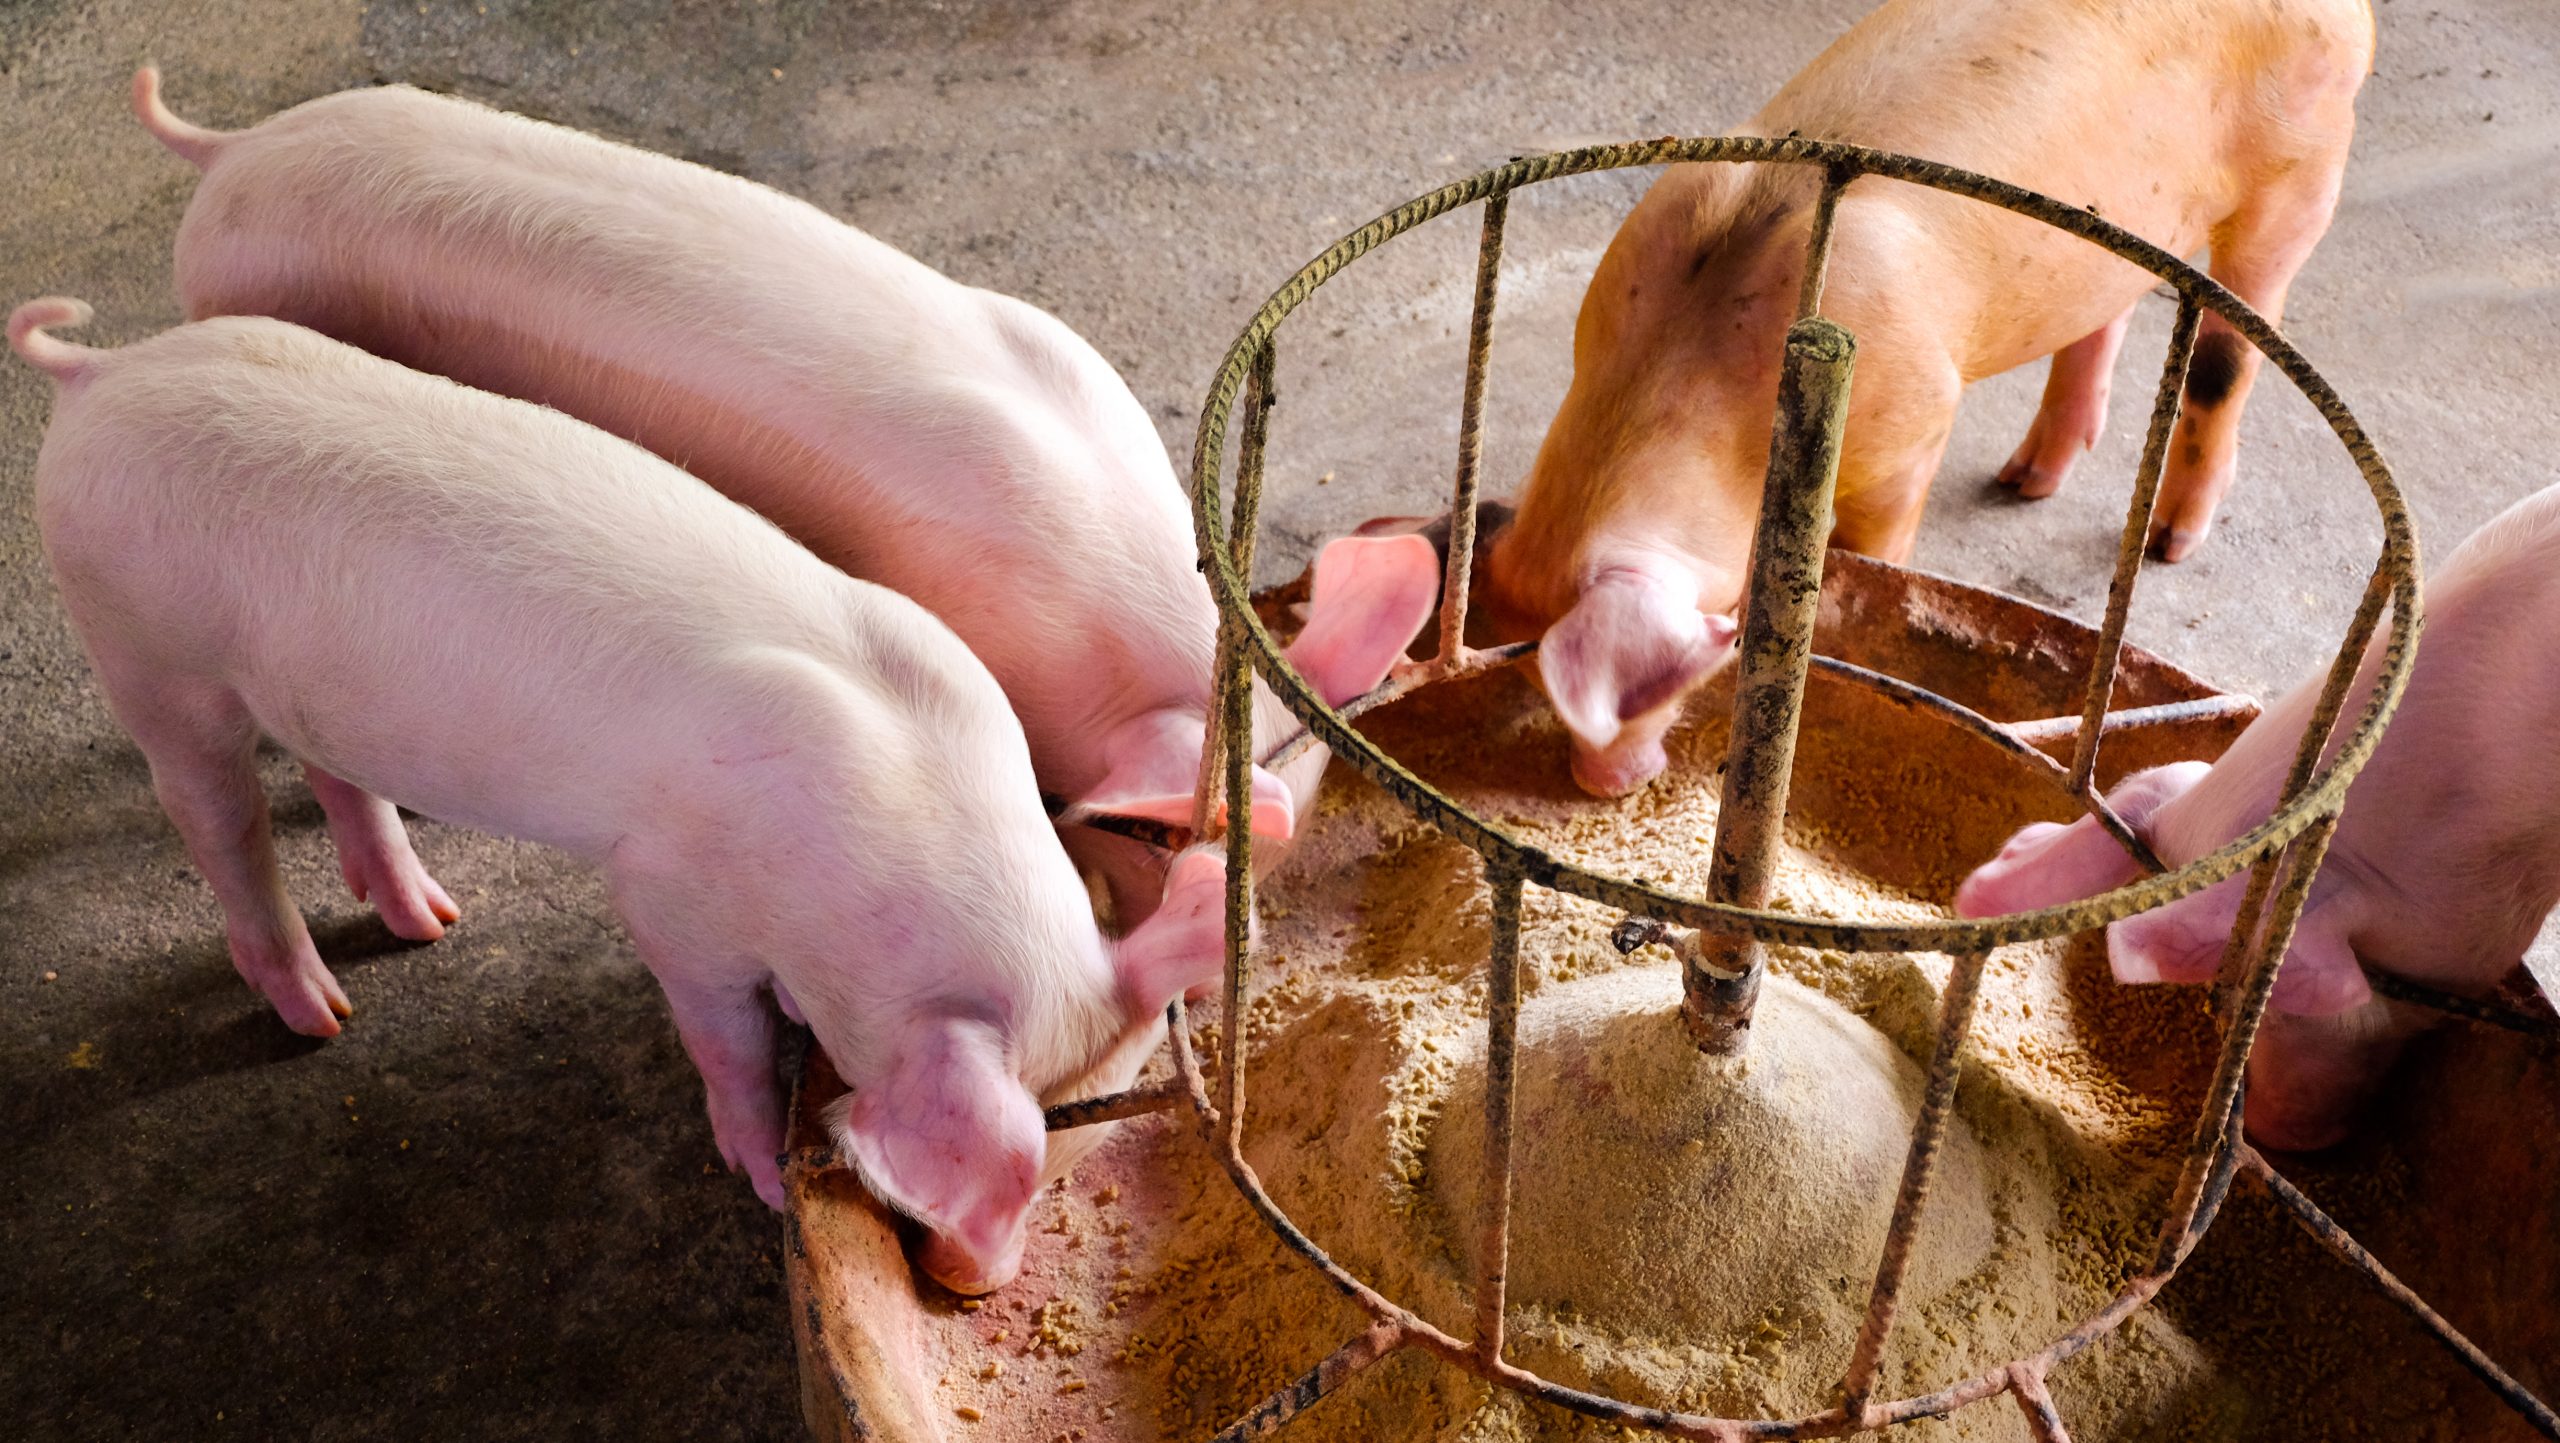 EU lifts ban on feeding livestock processed animal protein (PAP)